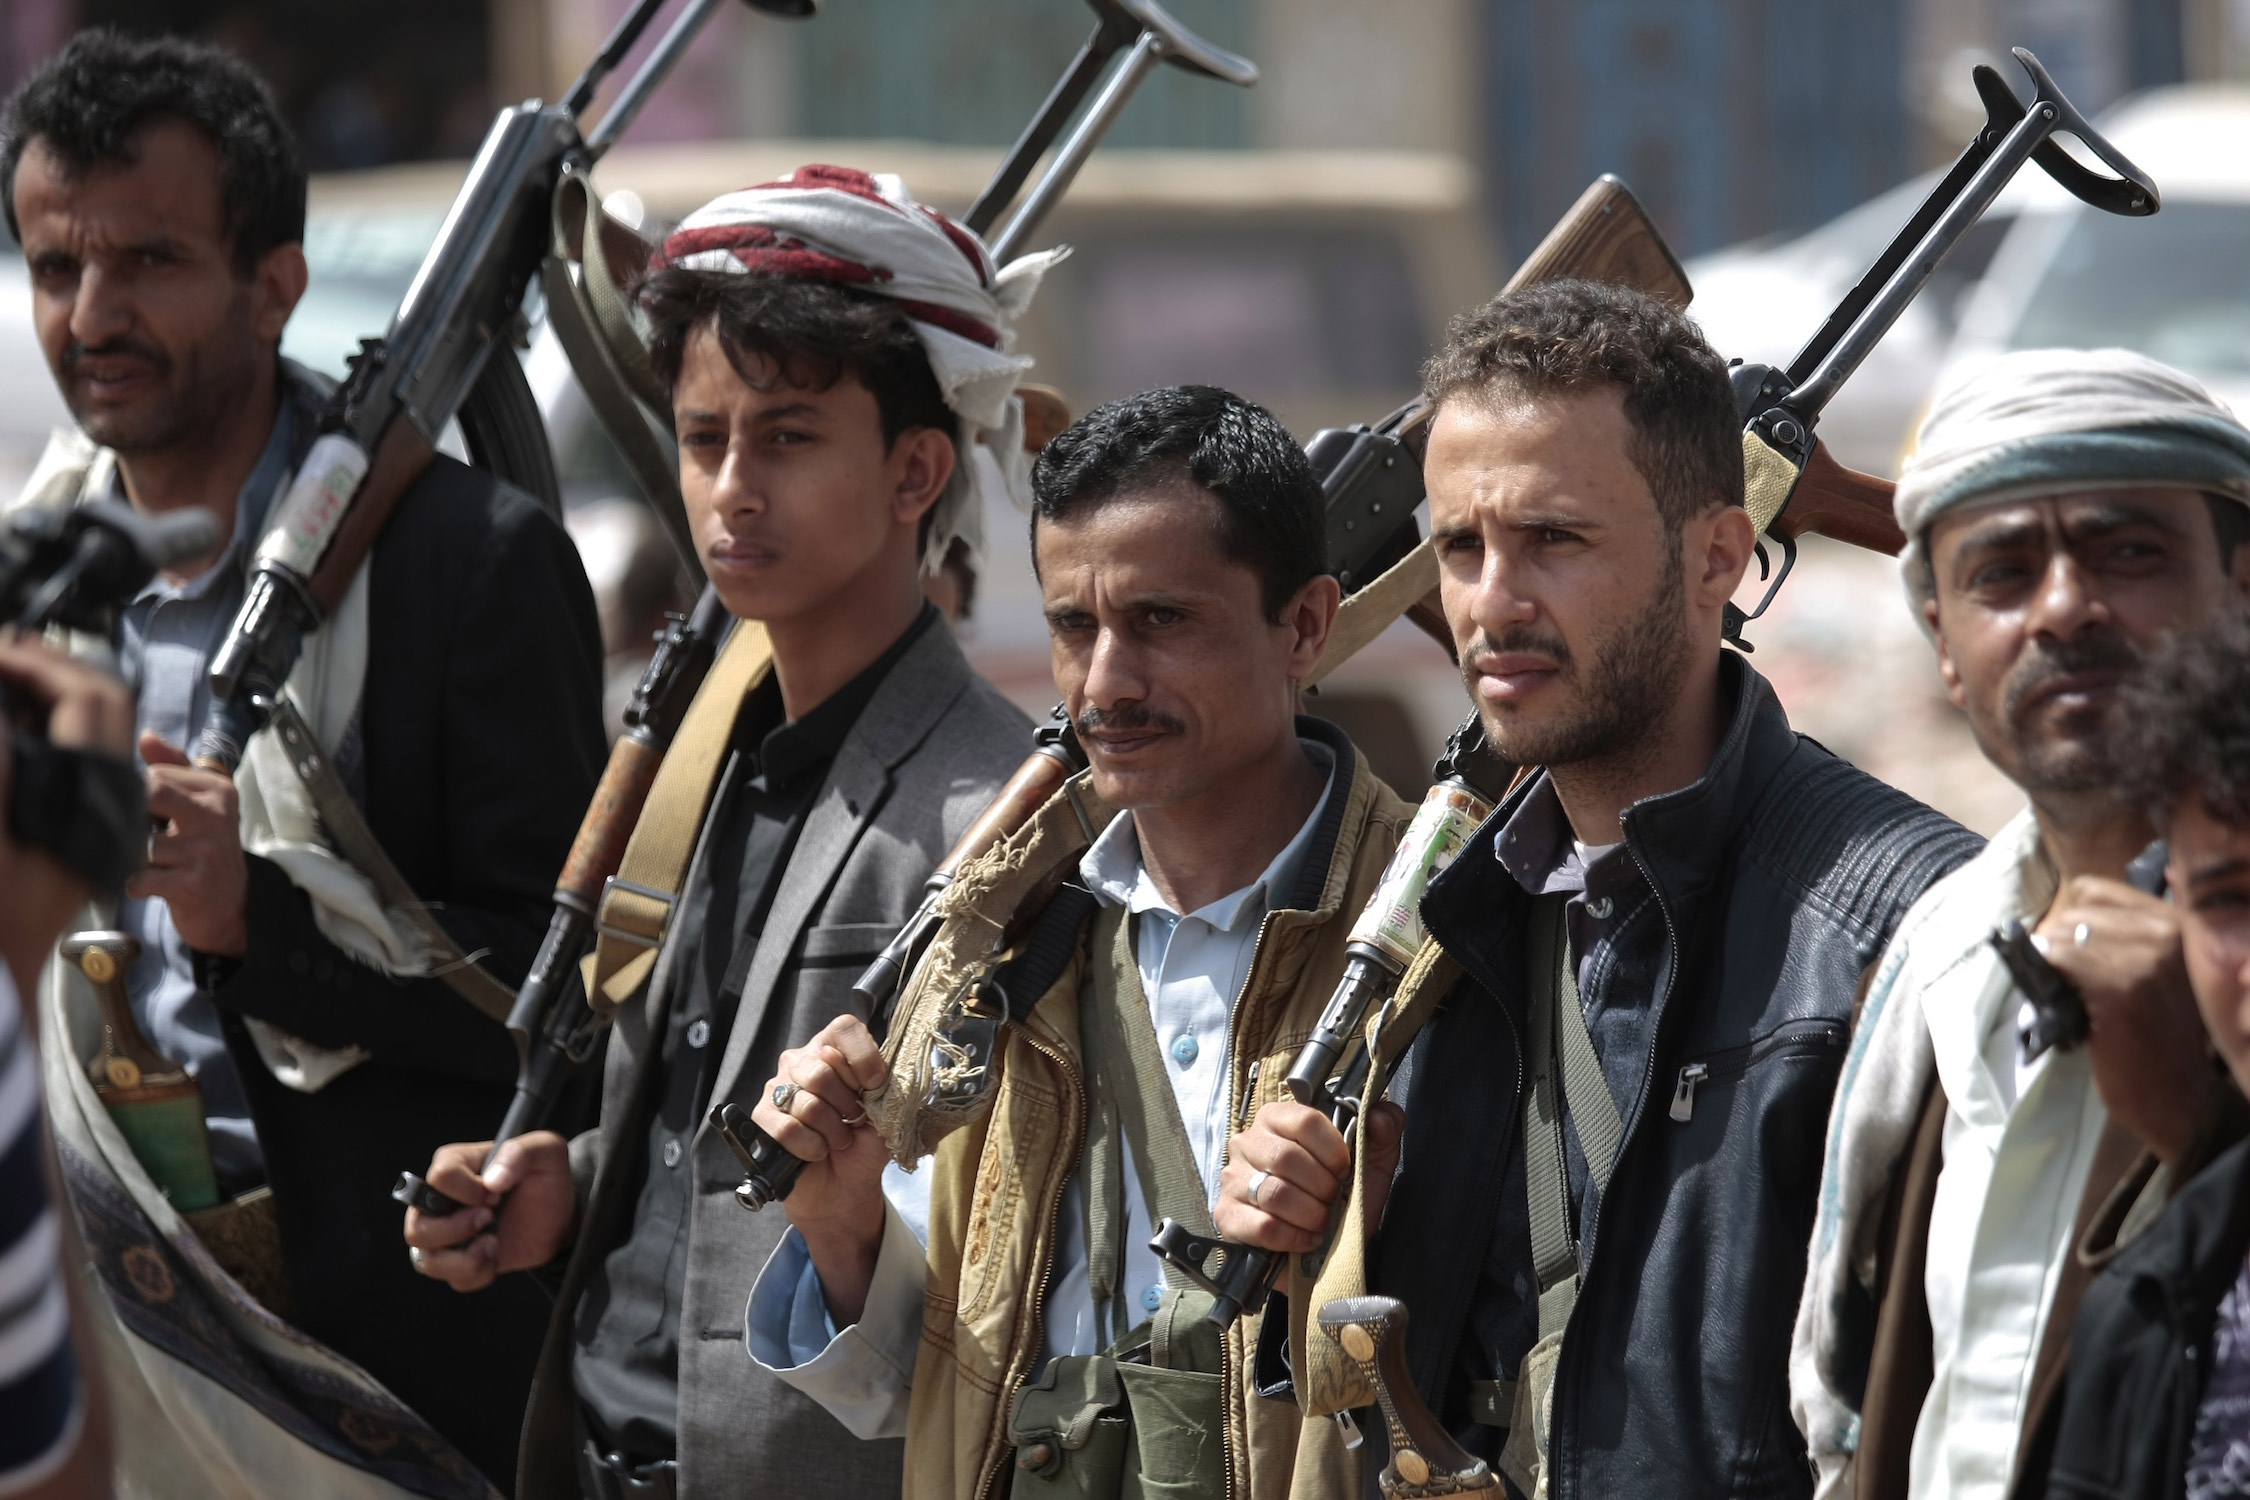 Houthi fighters in Yemen